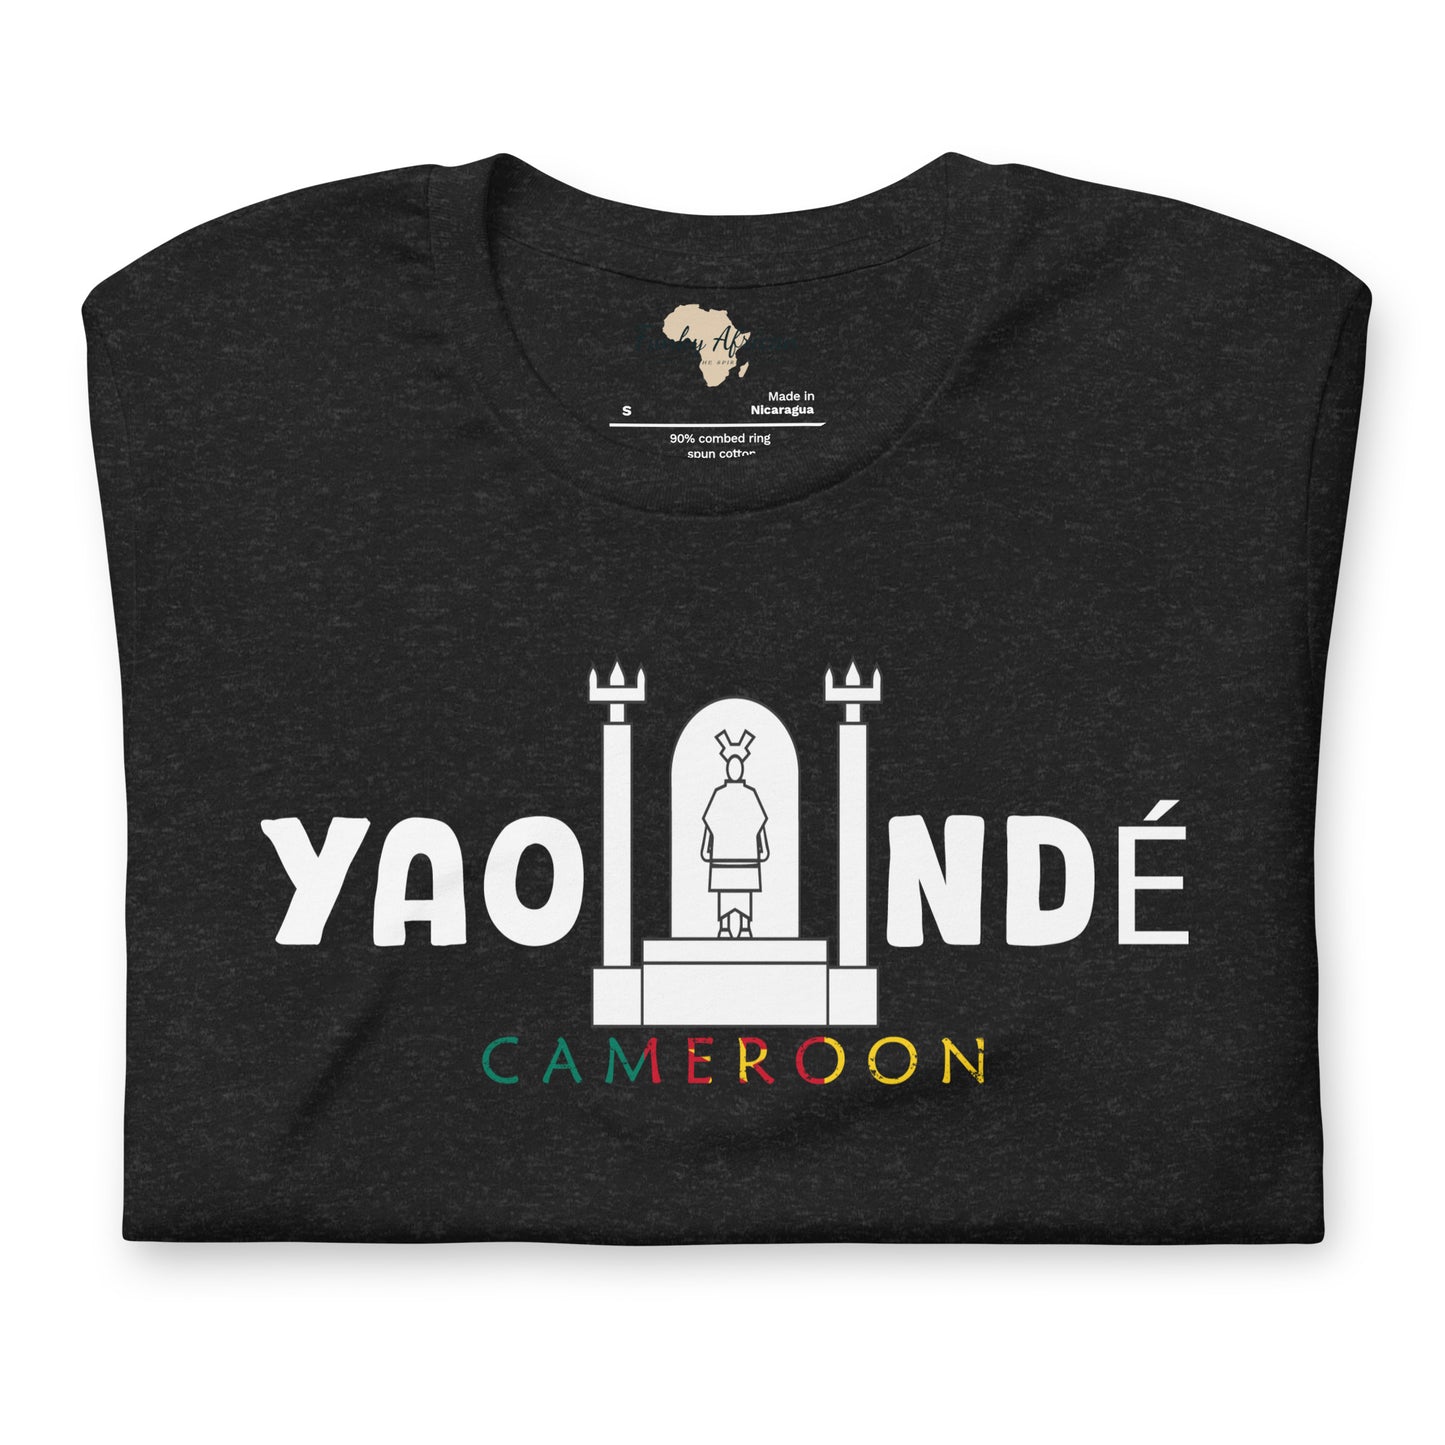 Cameroon capital unisex tee